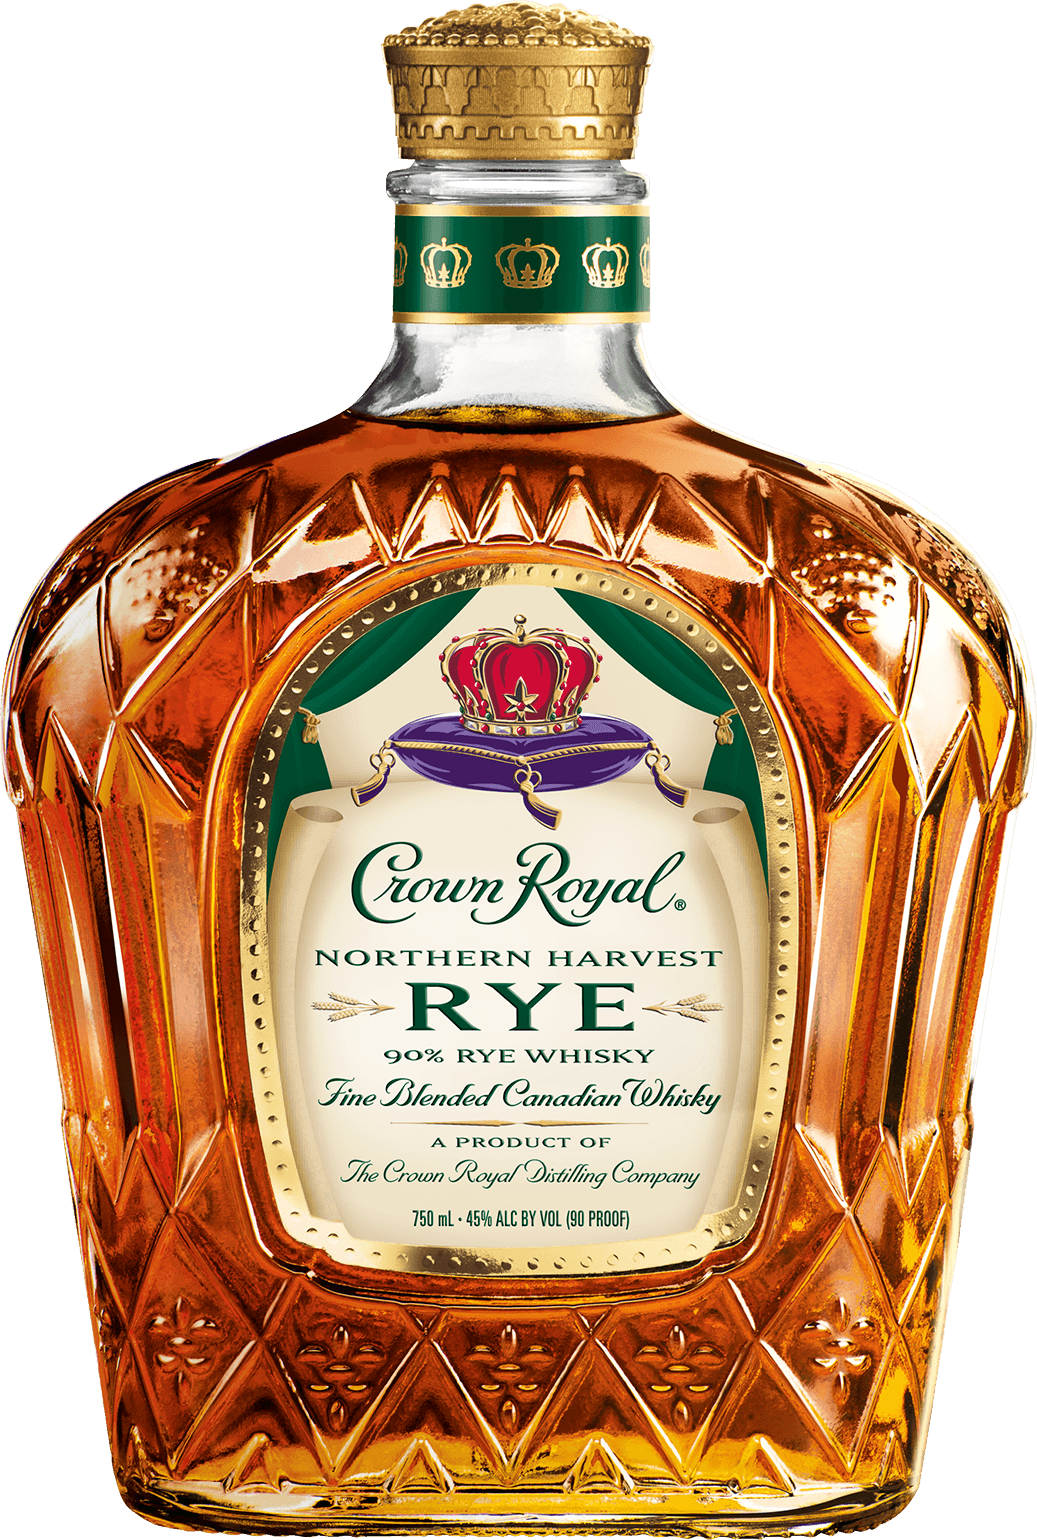 Crown Royal Northern Harvest Rye Whisky Bottle - Canadian Whisky - Crown Royal